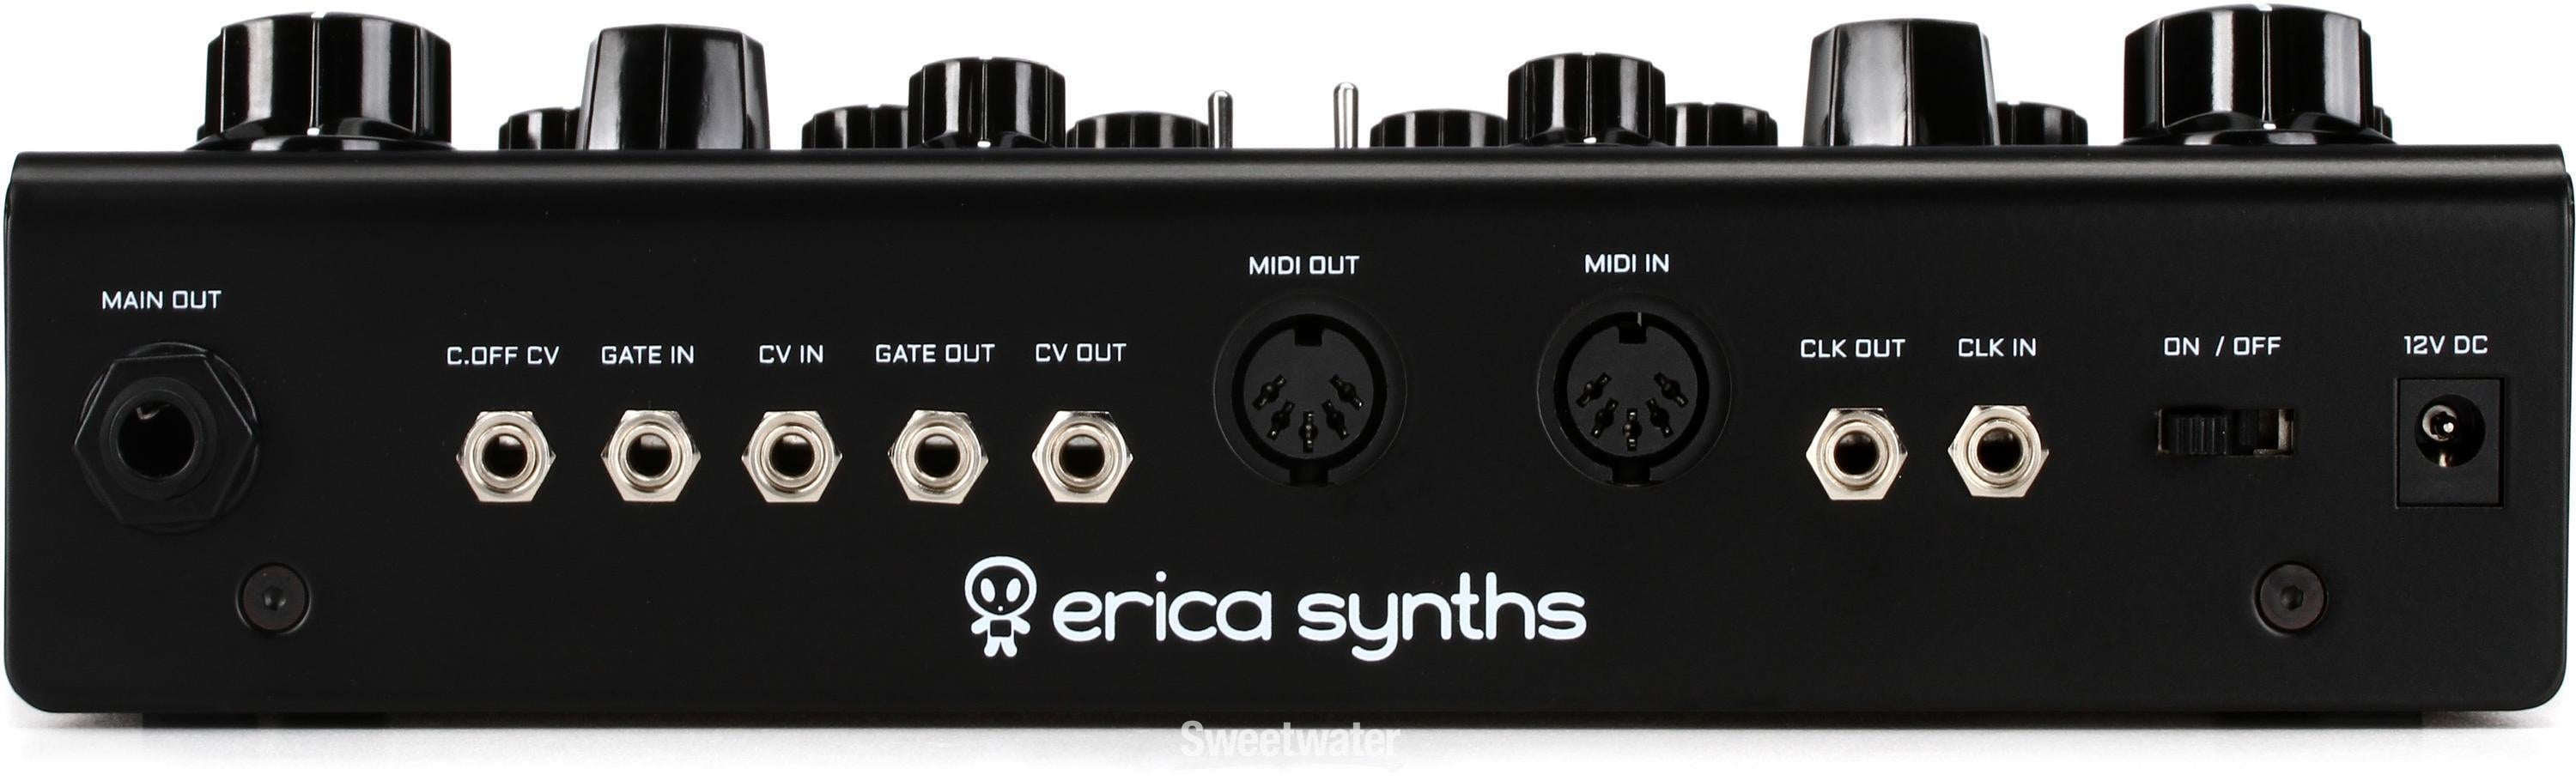 Erica Synths Bassline DB-01 Desktop Bassline Synthesizer | Sweetwater